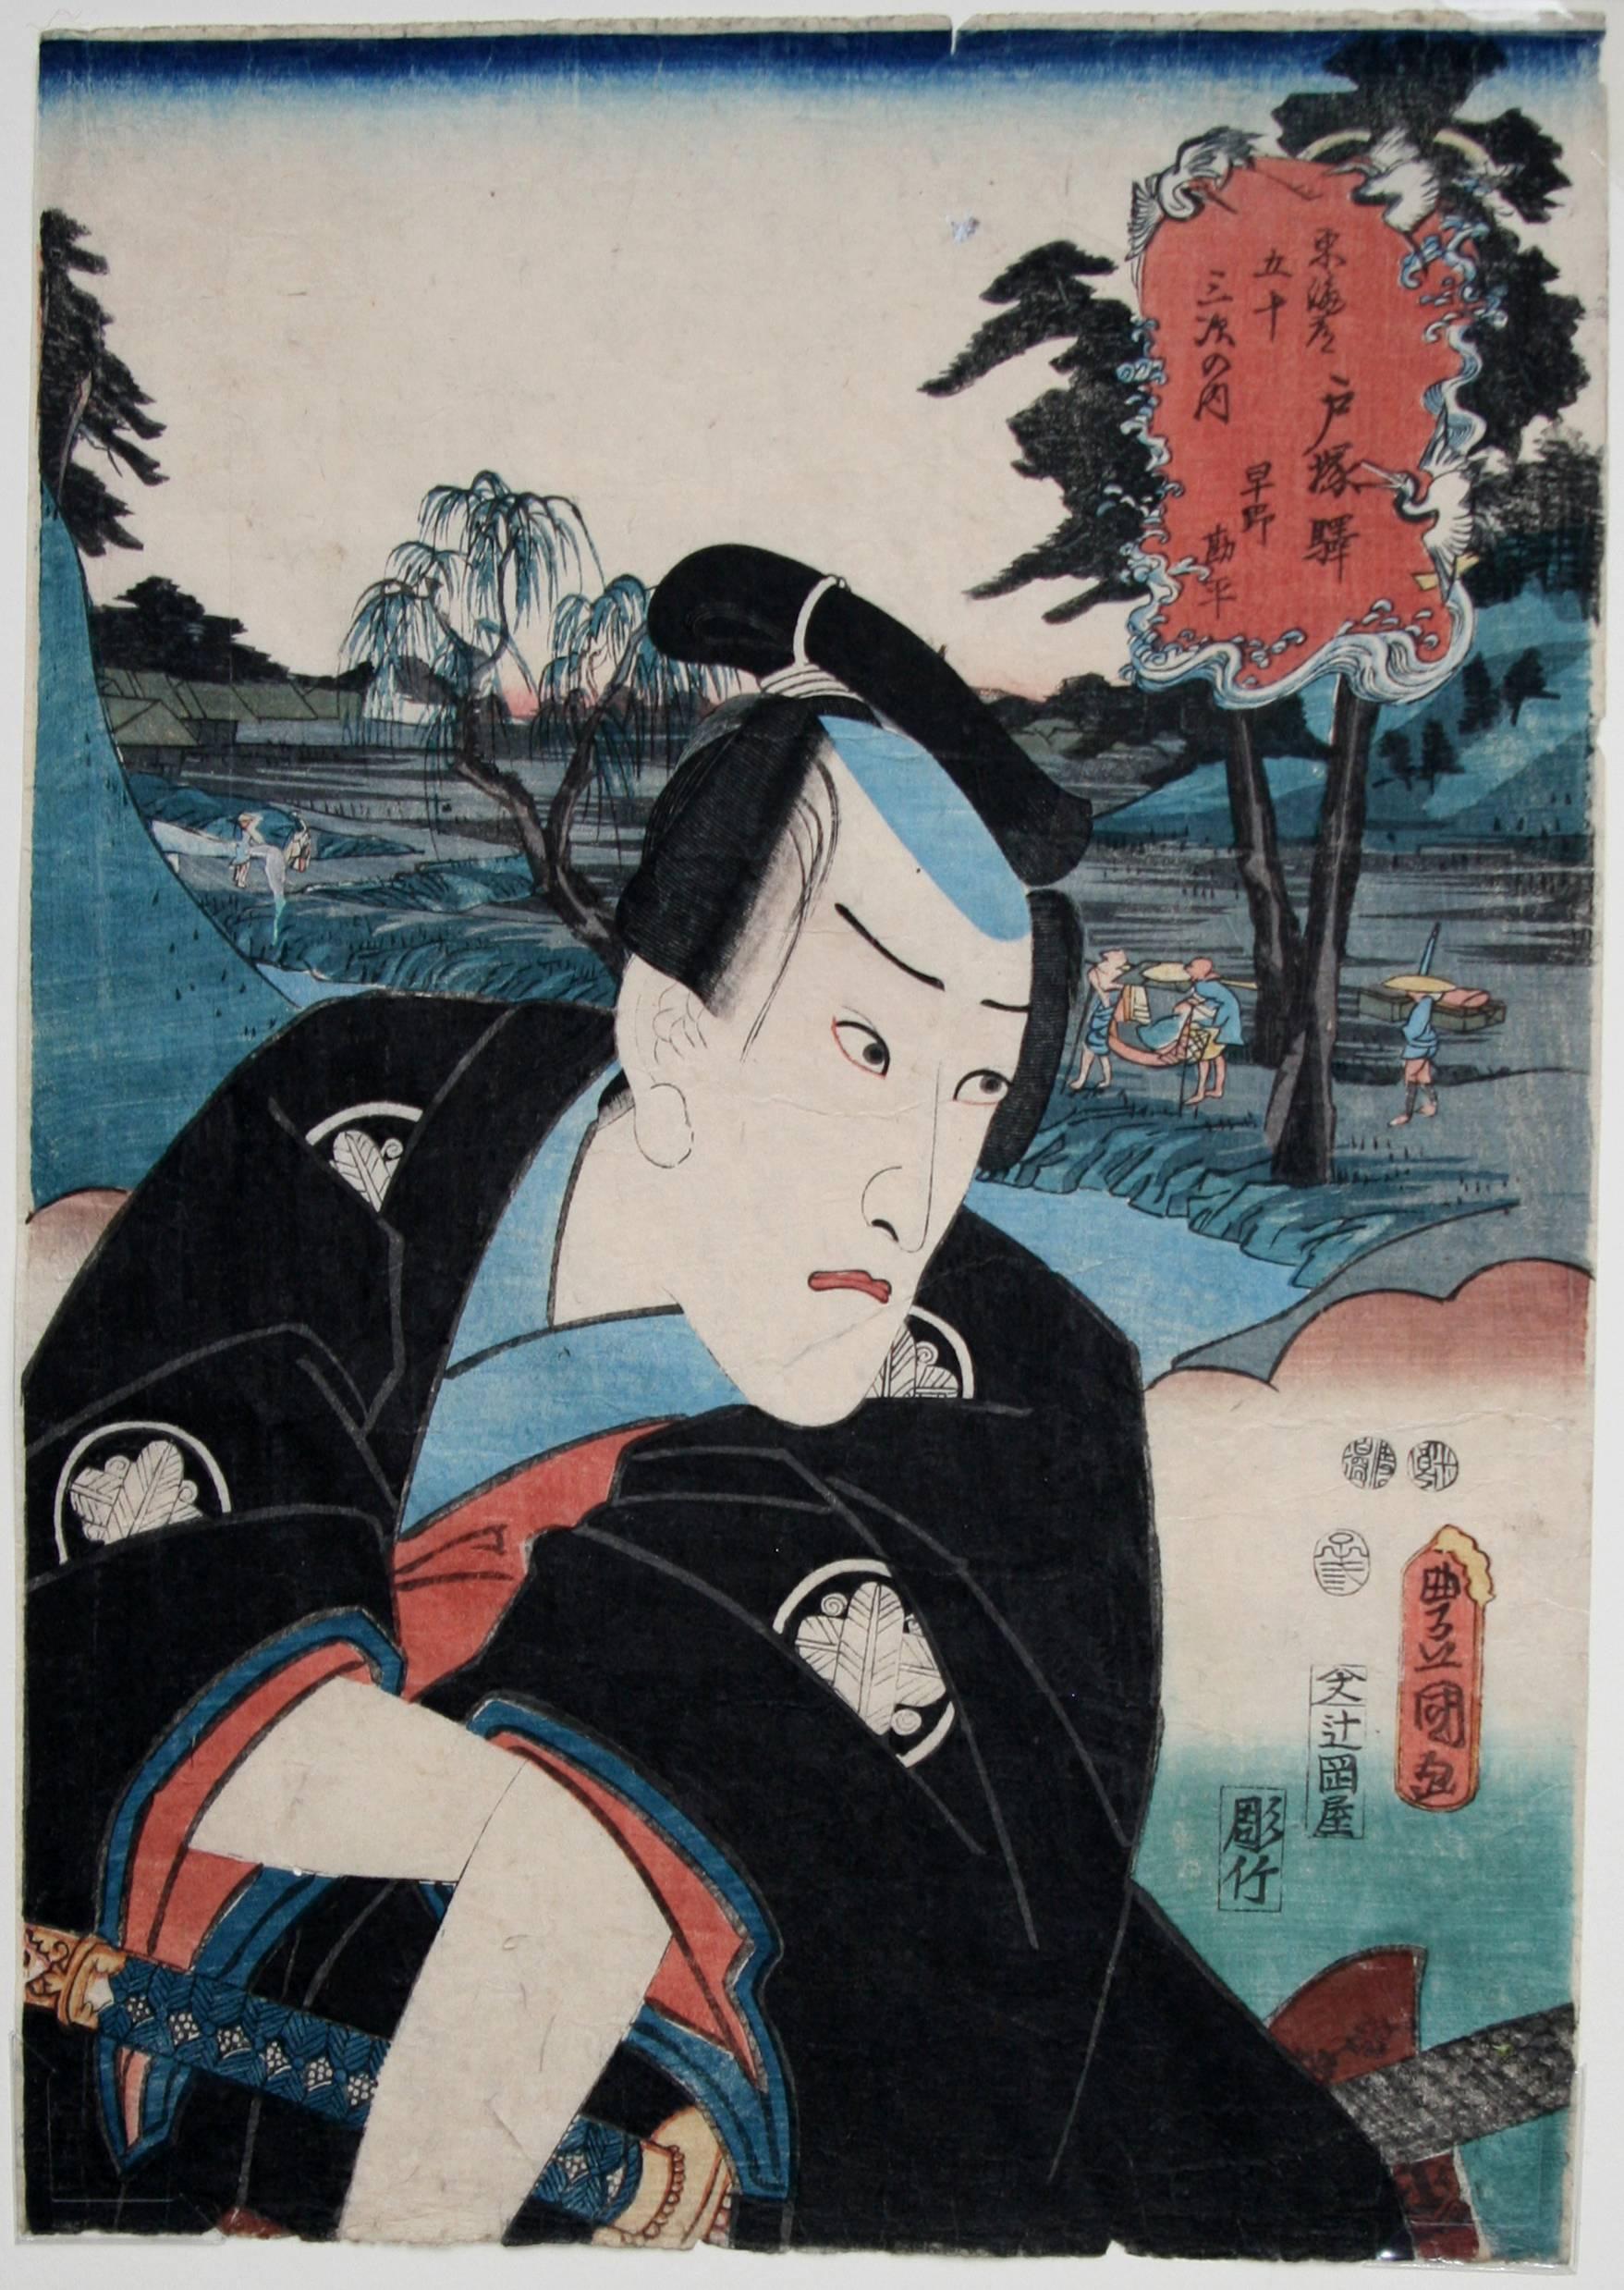 Totsuka. - Print by Utagawa Kunisada (Toyokuni III)